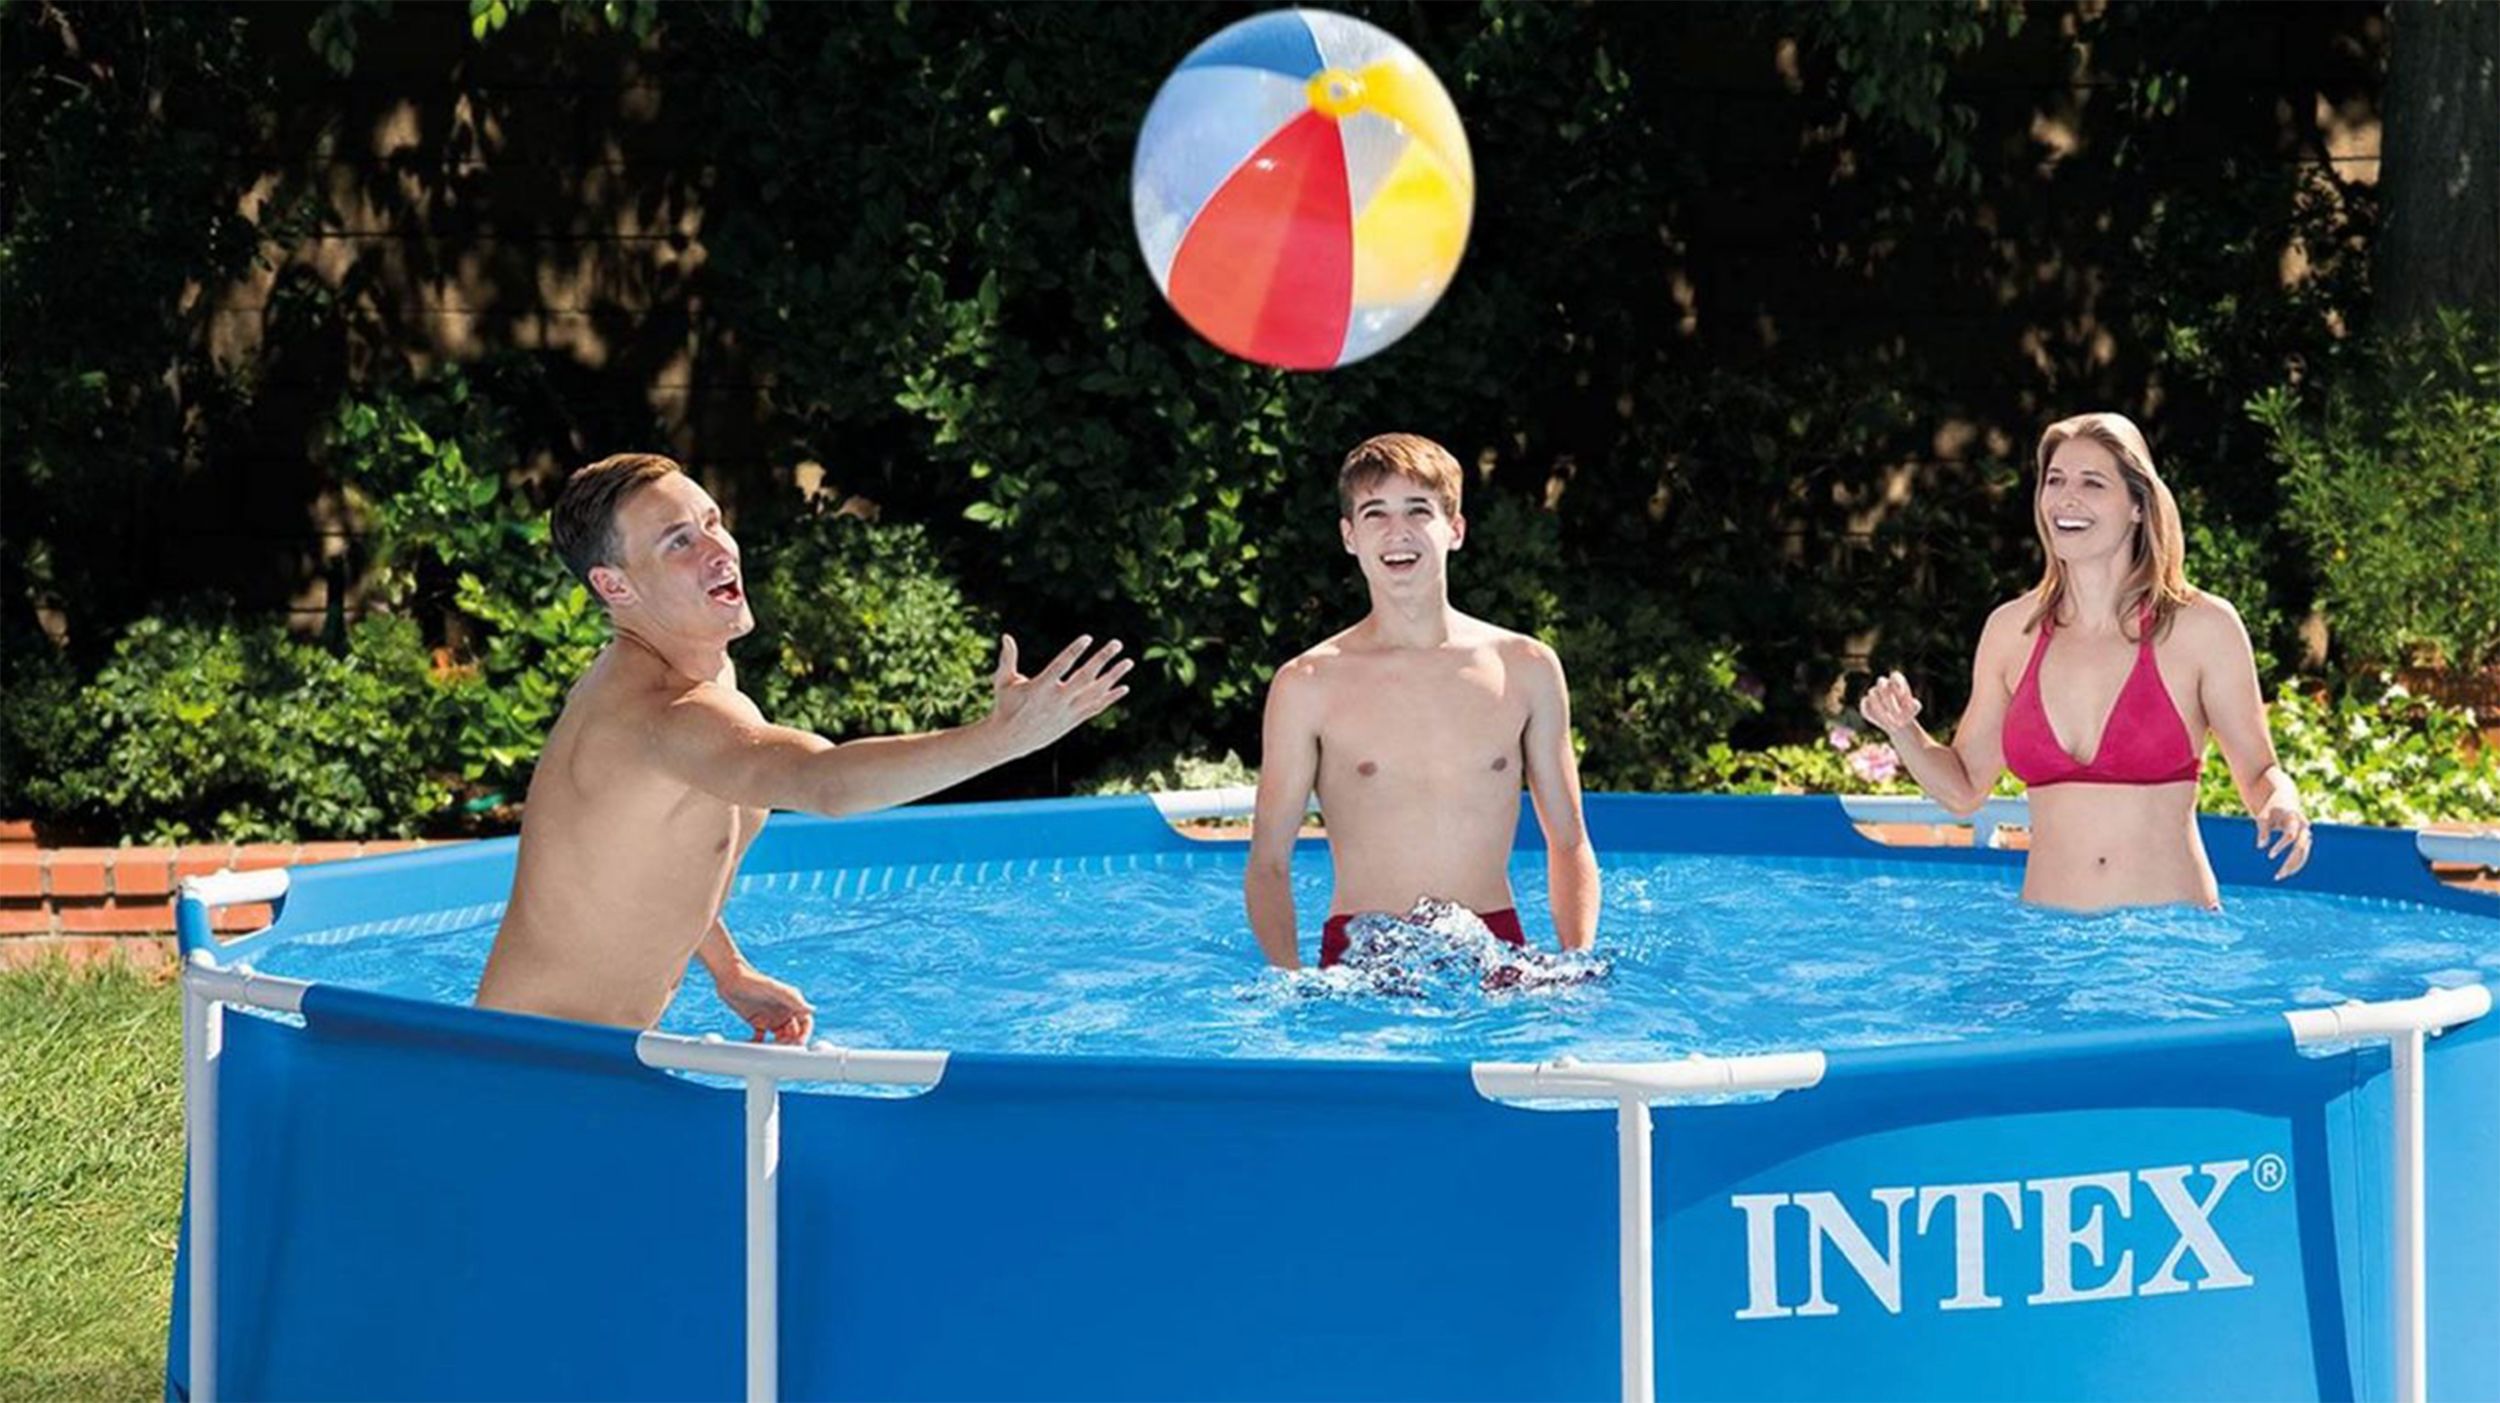 48 Best Art Deco Pool ideas  pool, art deco pool, swimming pools